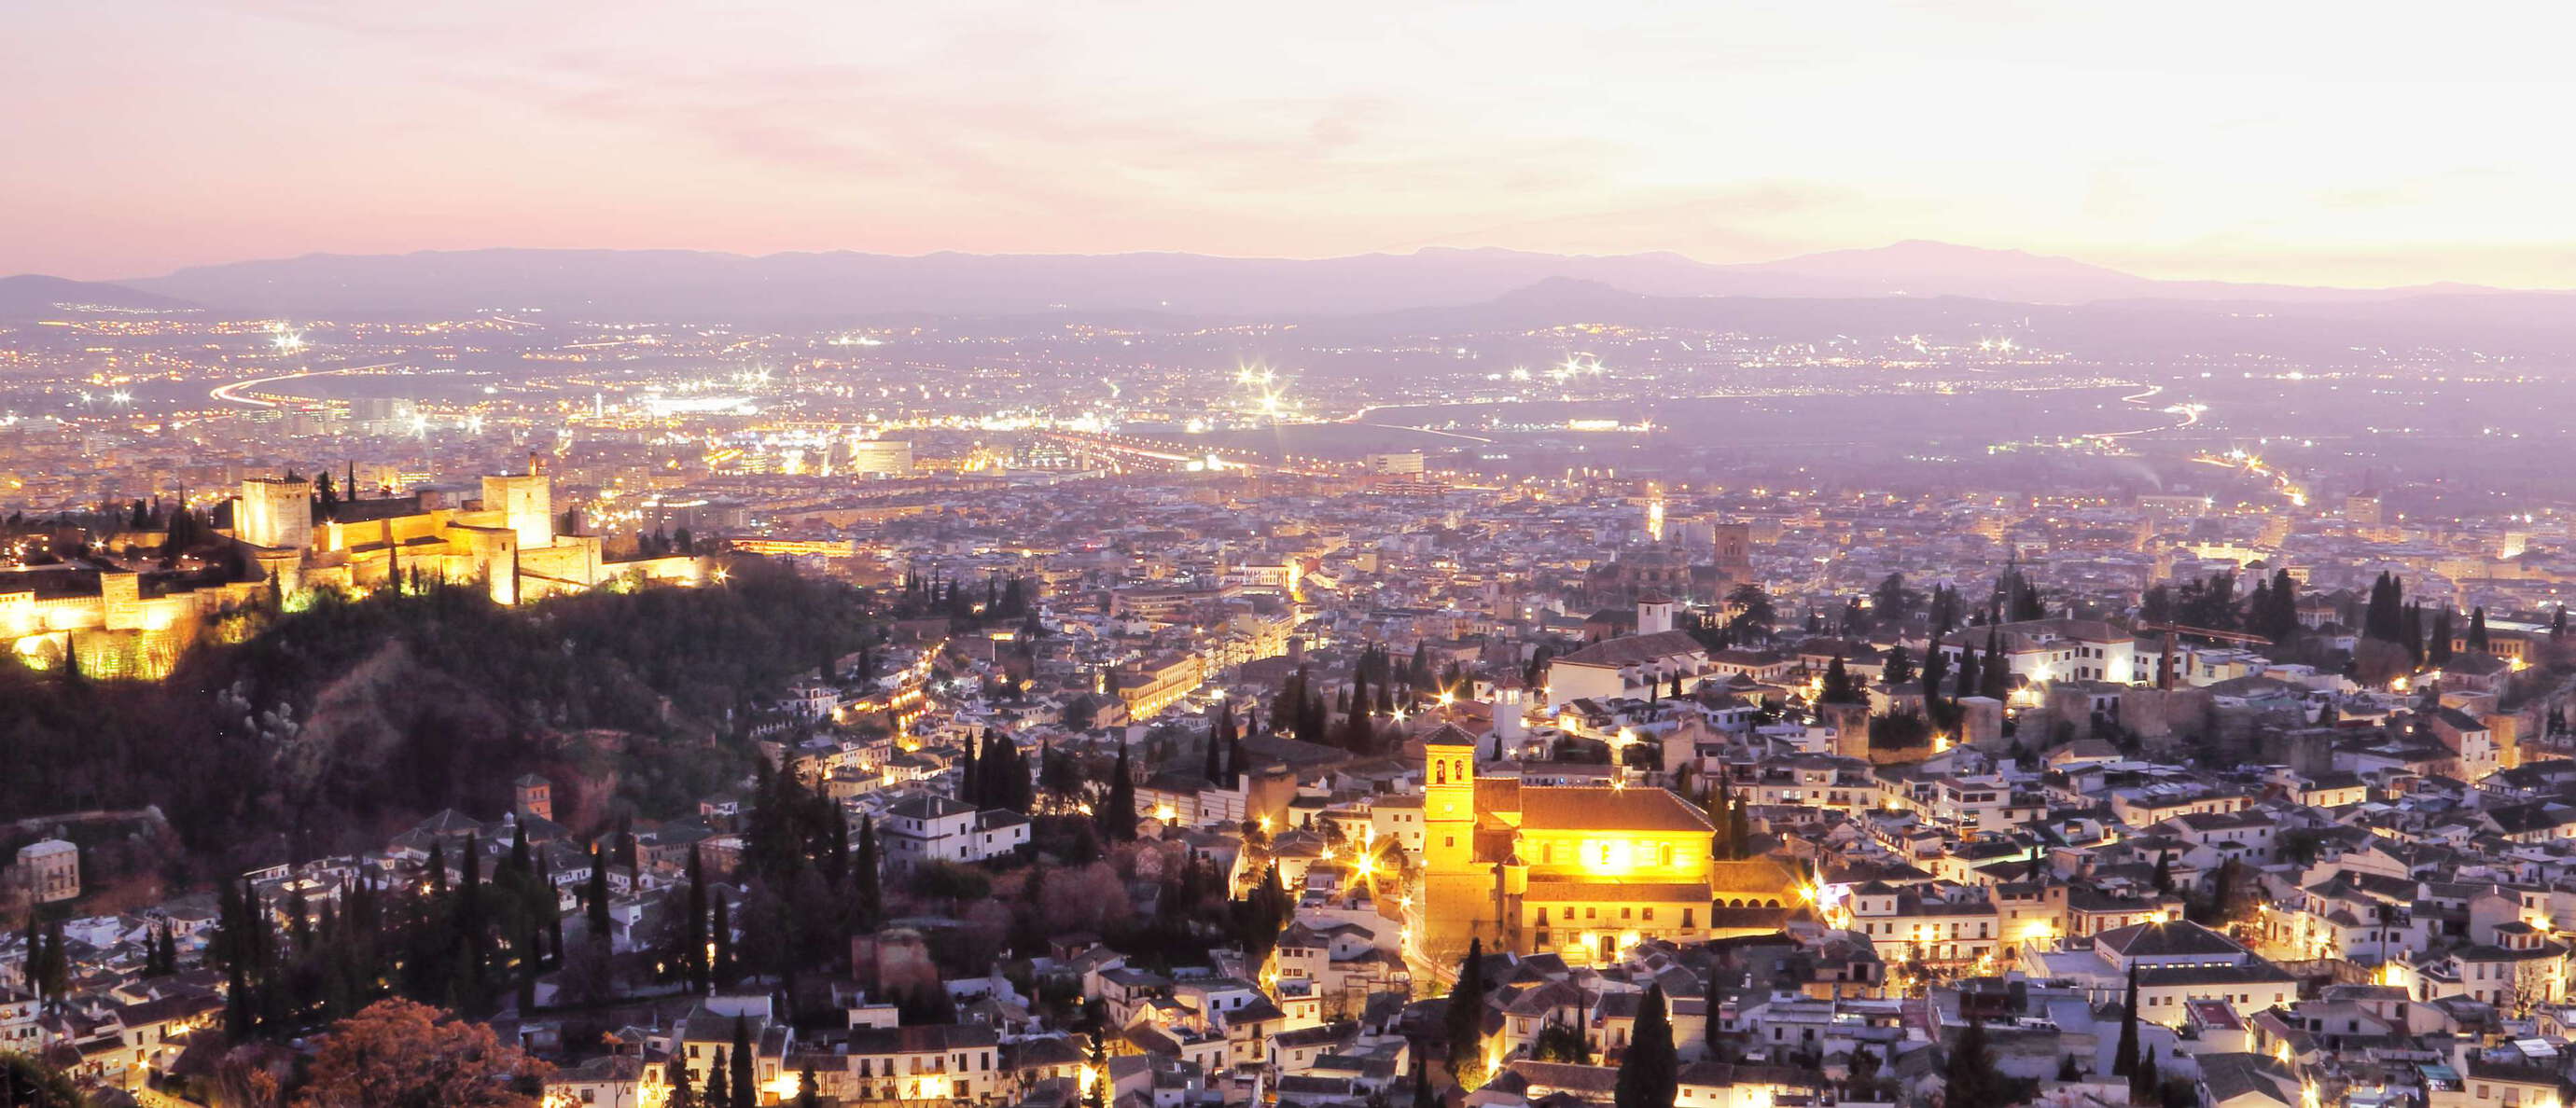 Granada after sunset